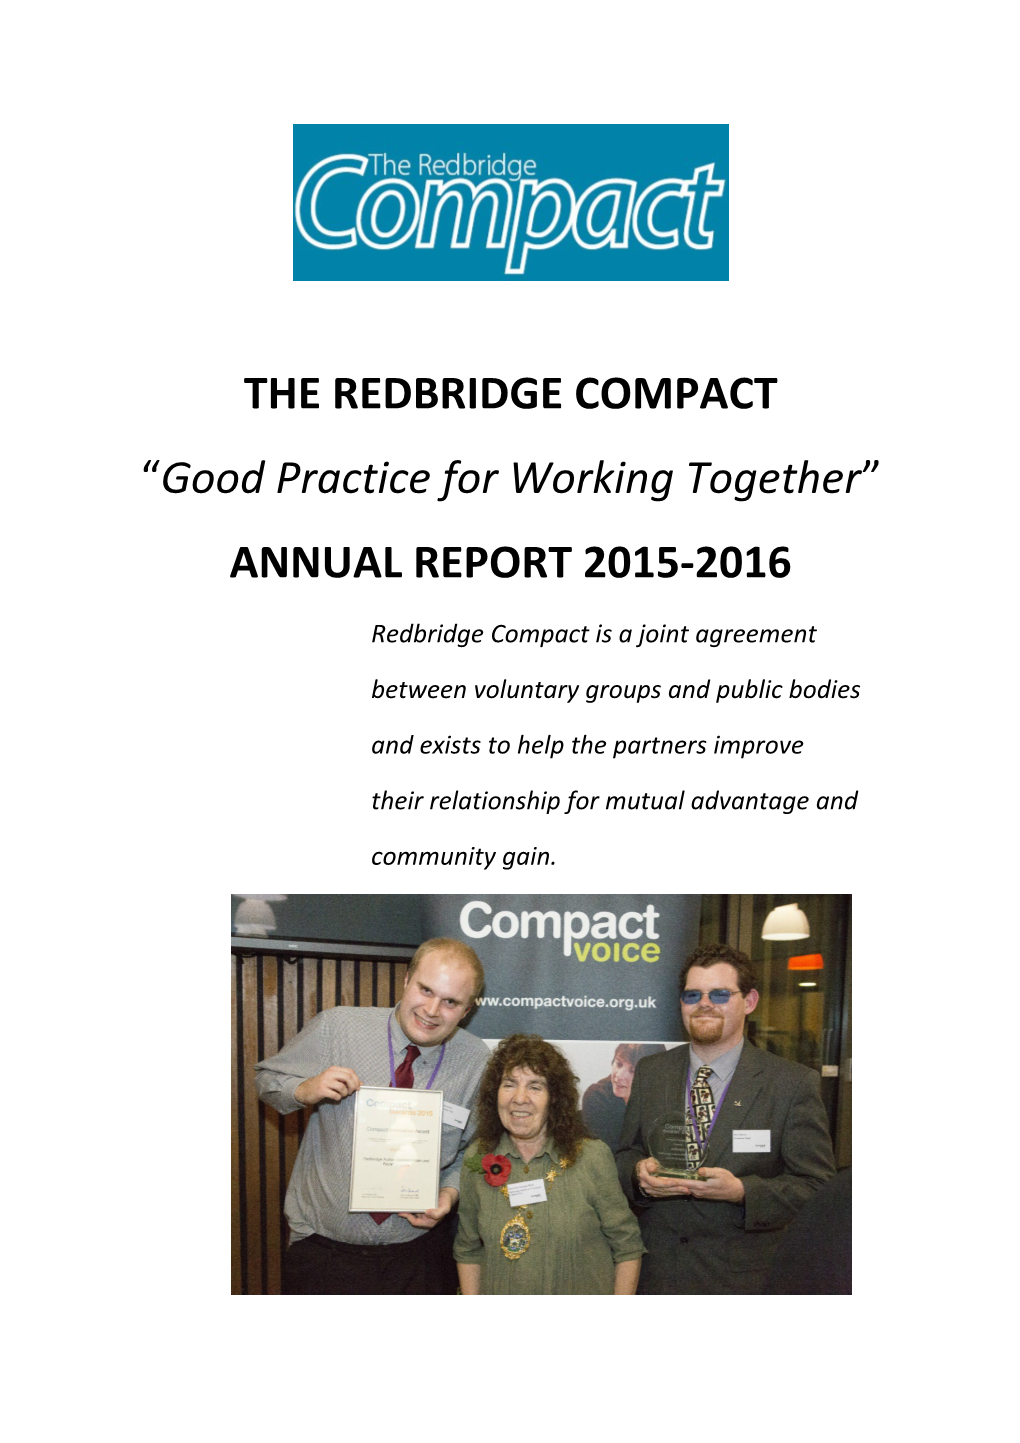 The Redbridge Compact